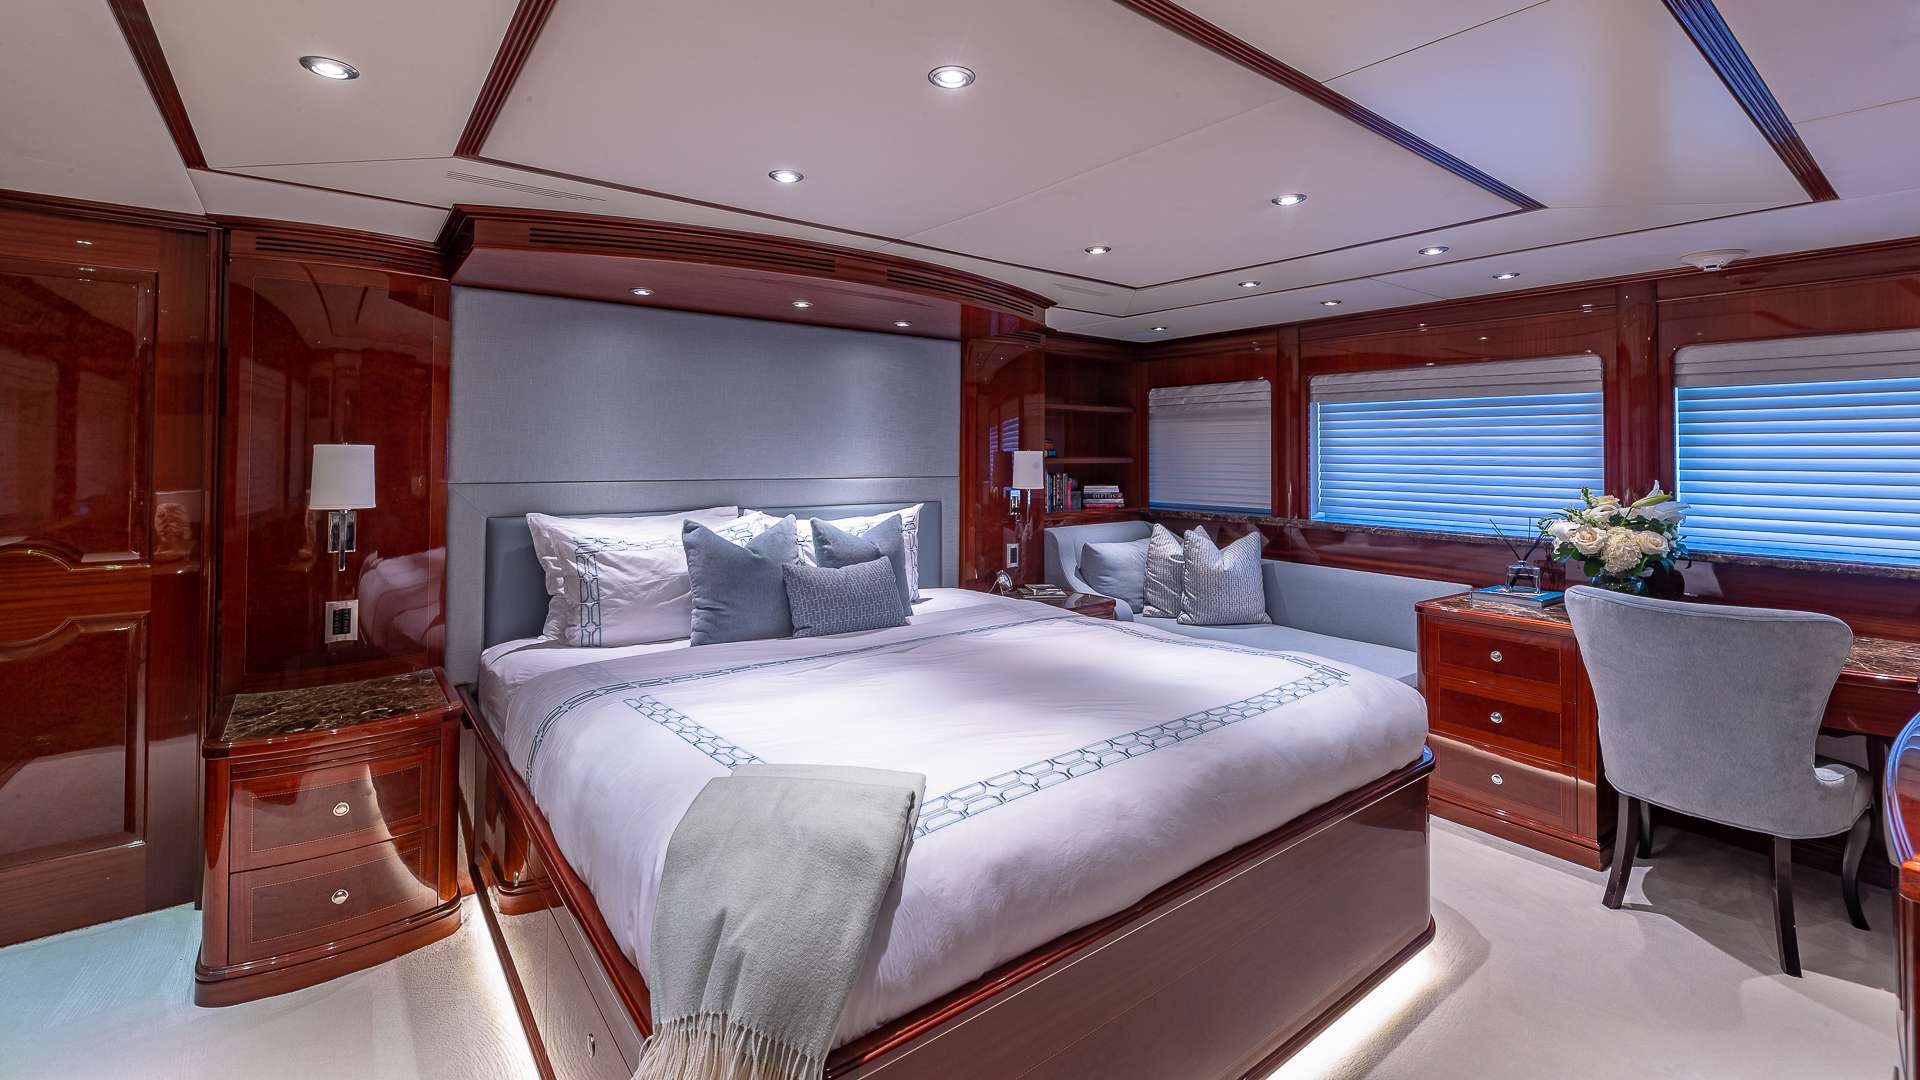 KASHMIR Yacht Charter - On Deck Master Stateroom (XL King Bed)